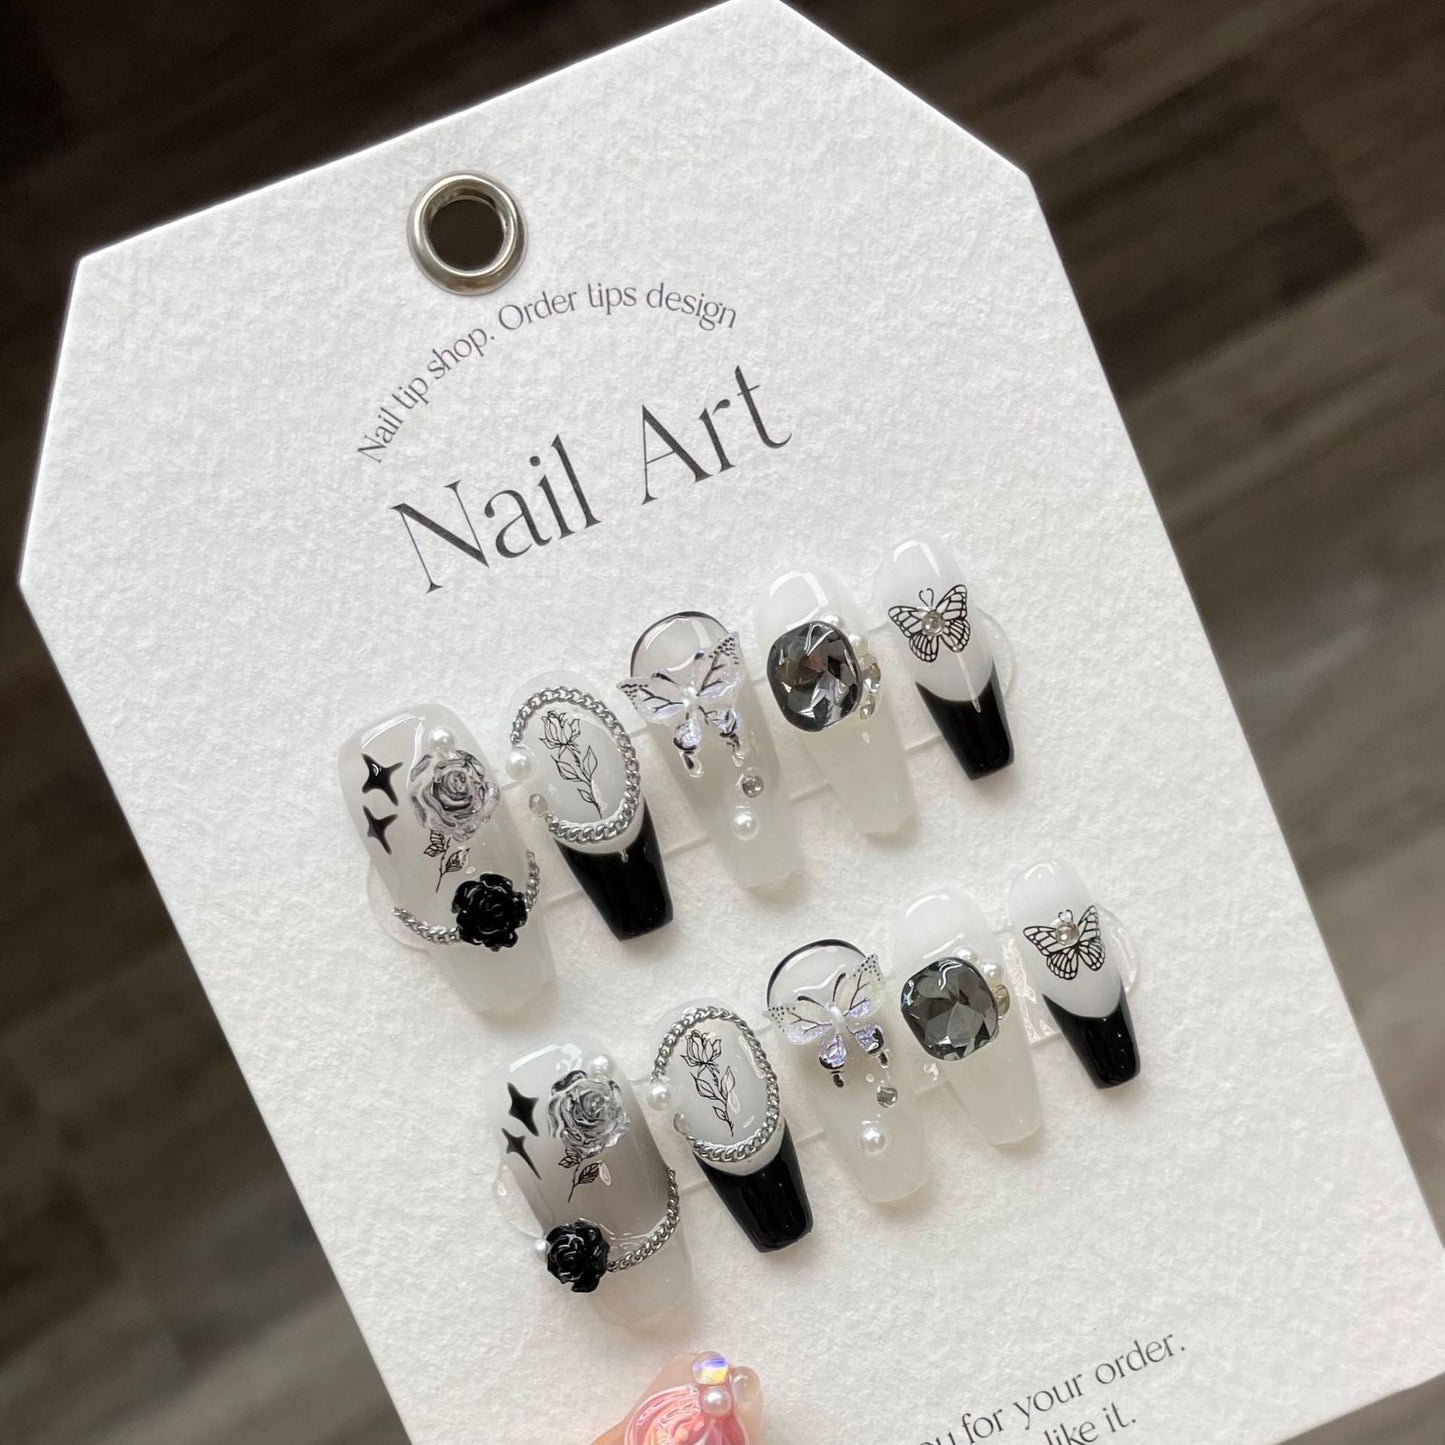 891 Butterfly flower style press on nails 100% handmade false nails white black